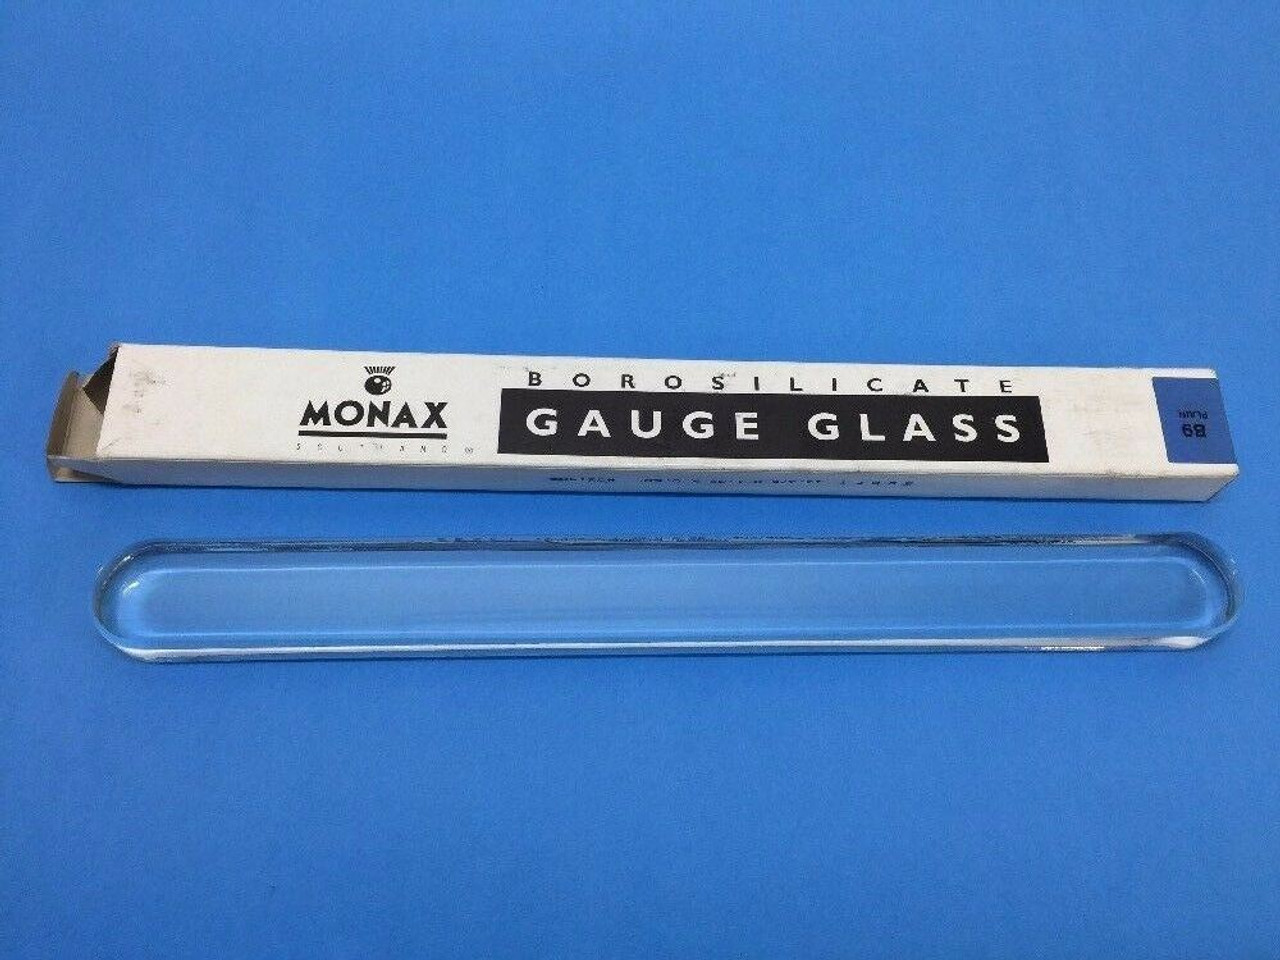 Monax B9 Plain Borosilicate Gauge Glass - Clear, 13.375 x 1.32 x 0.68"